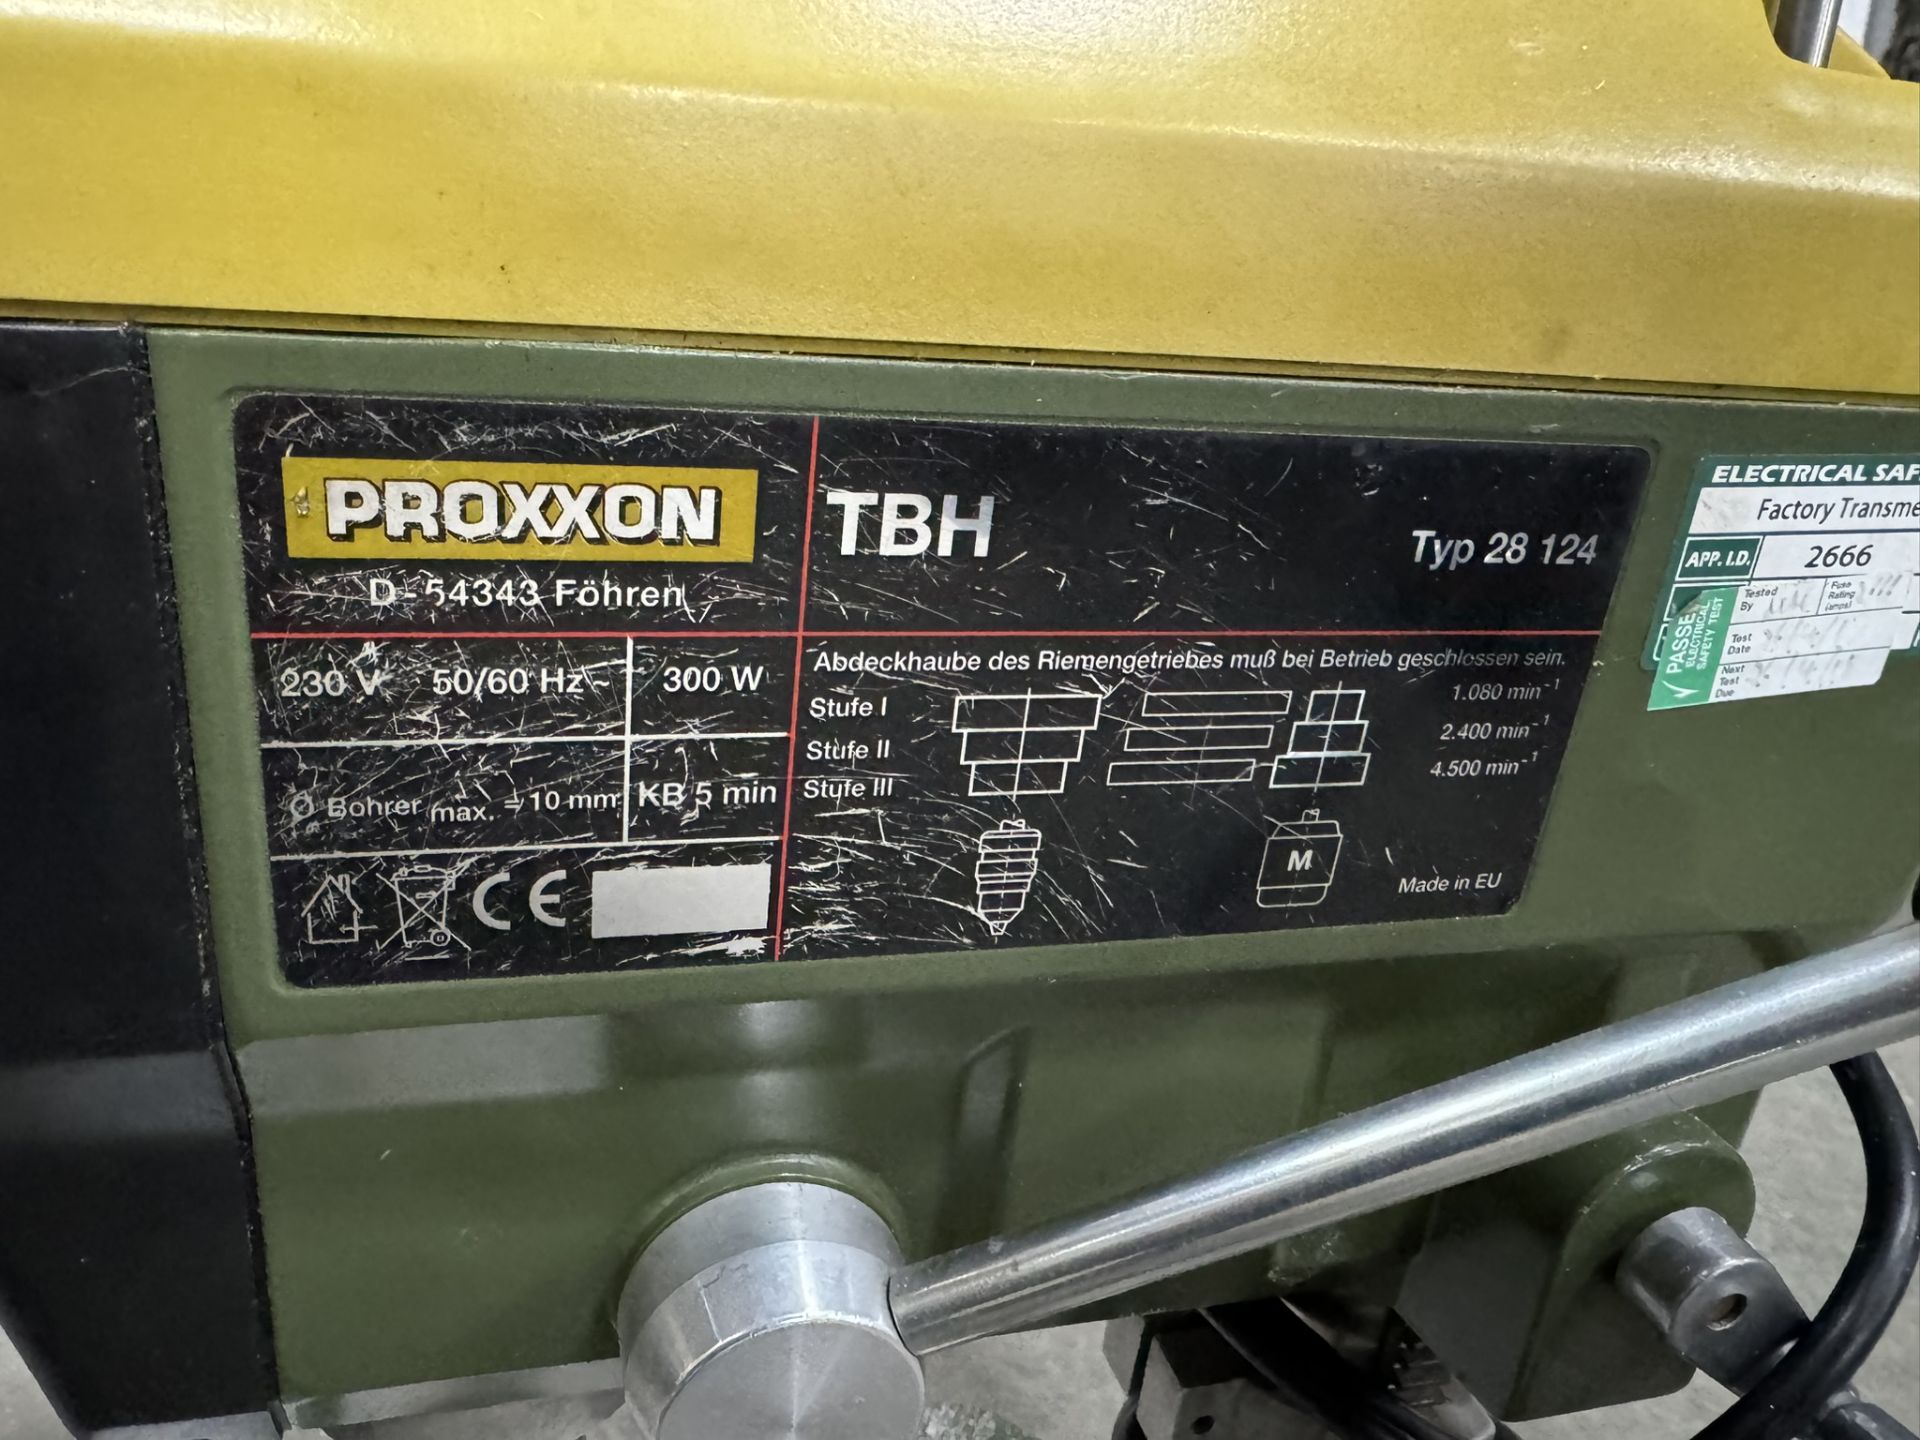 Proxxon 28124 TBH Bench Drill - Image 11 of 12